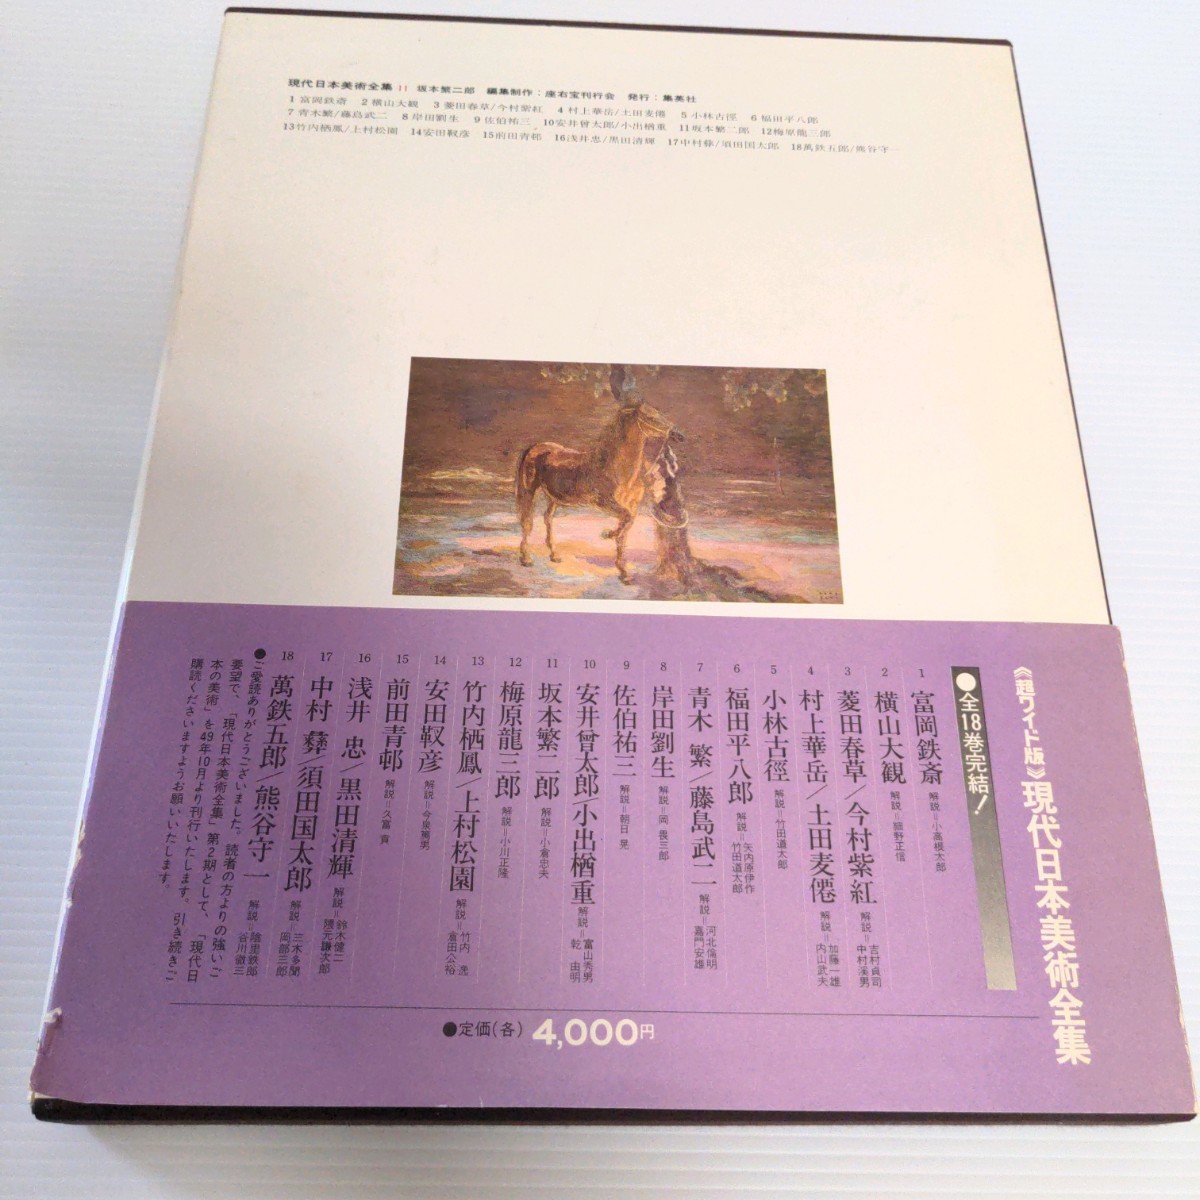  Sakamoto . two . present-day Japan fine art complete set of works no. 11 volume Shueisha super wide version explanation small .. Hara regular price 4000 jpy large book